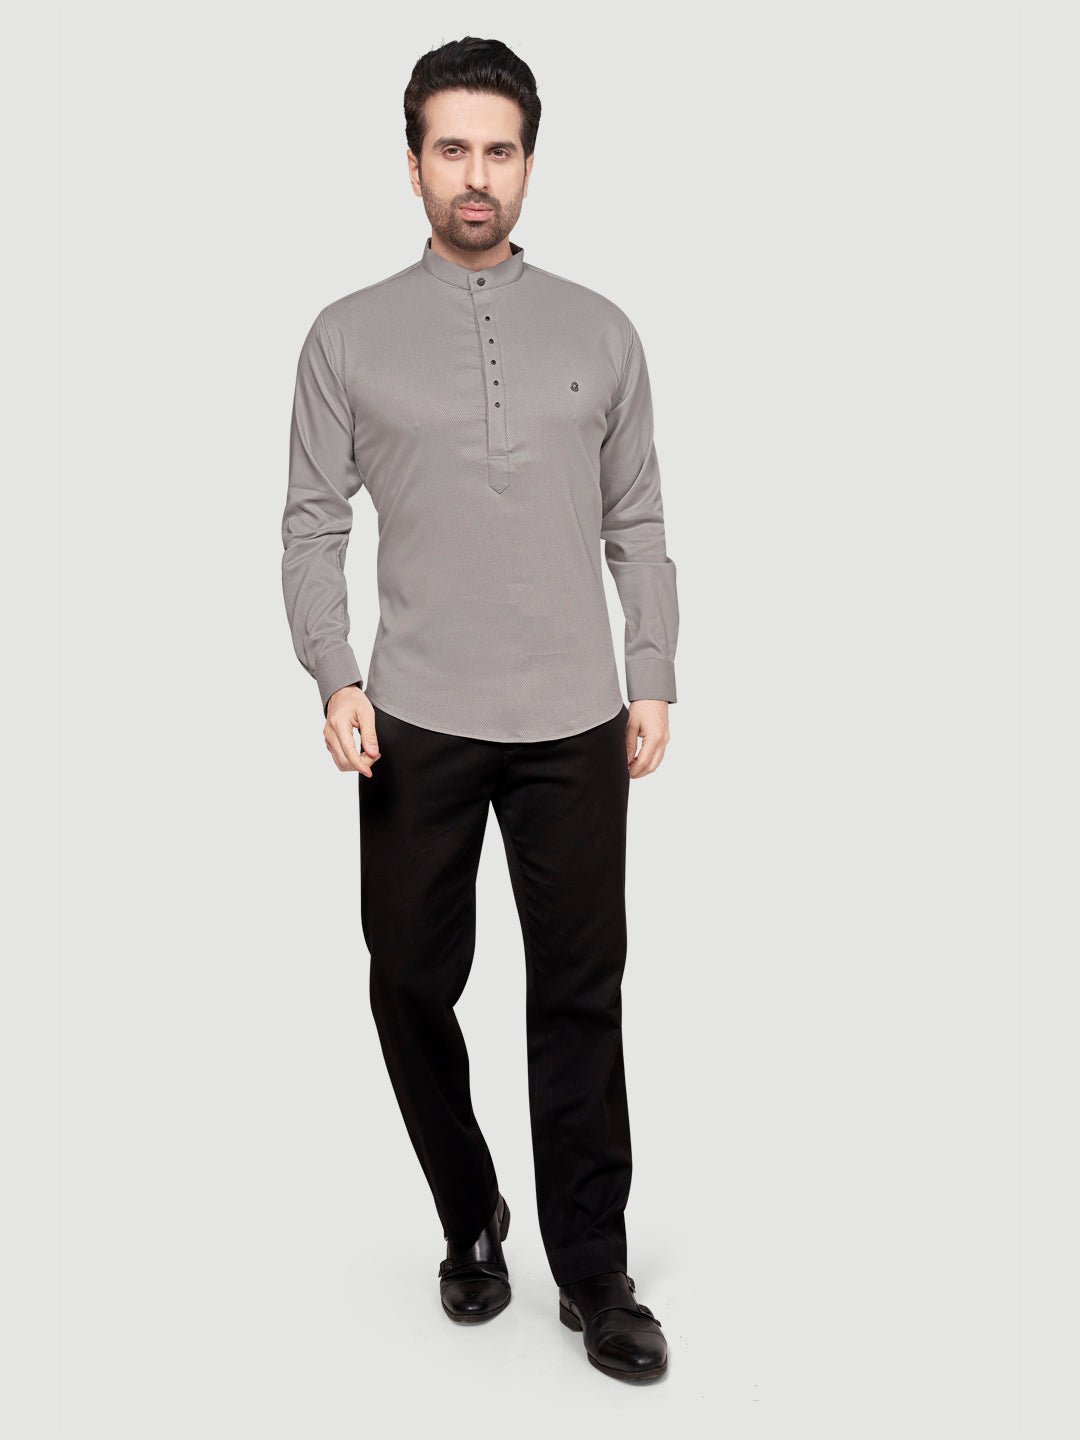 Black and White Men's Designer Short Kurta with Metal Buttons Steel Grey